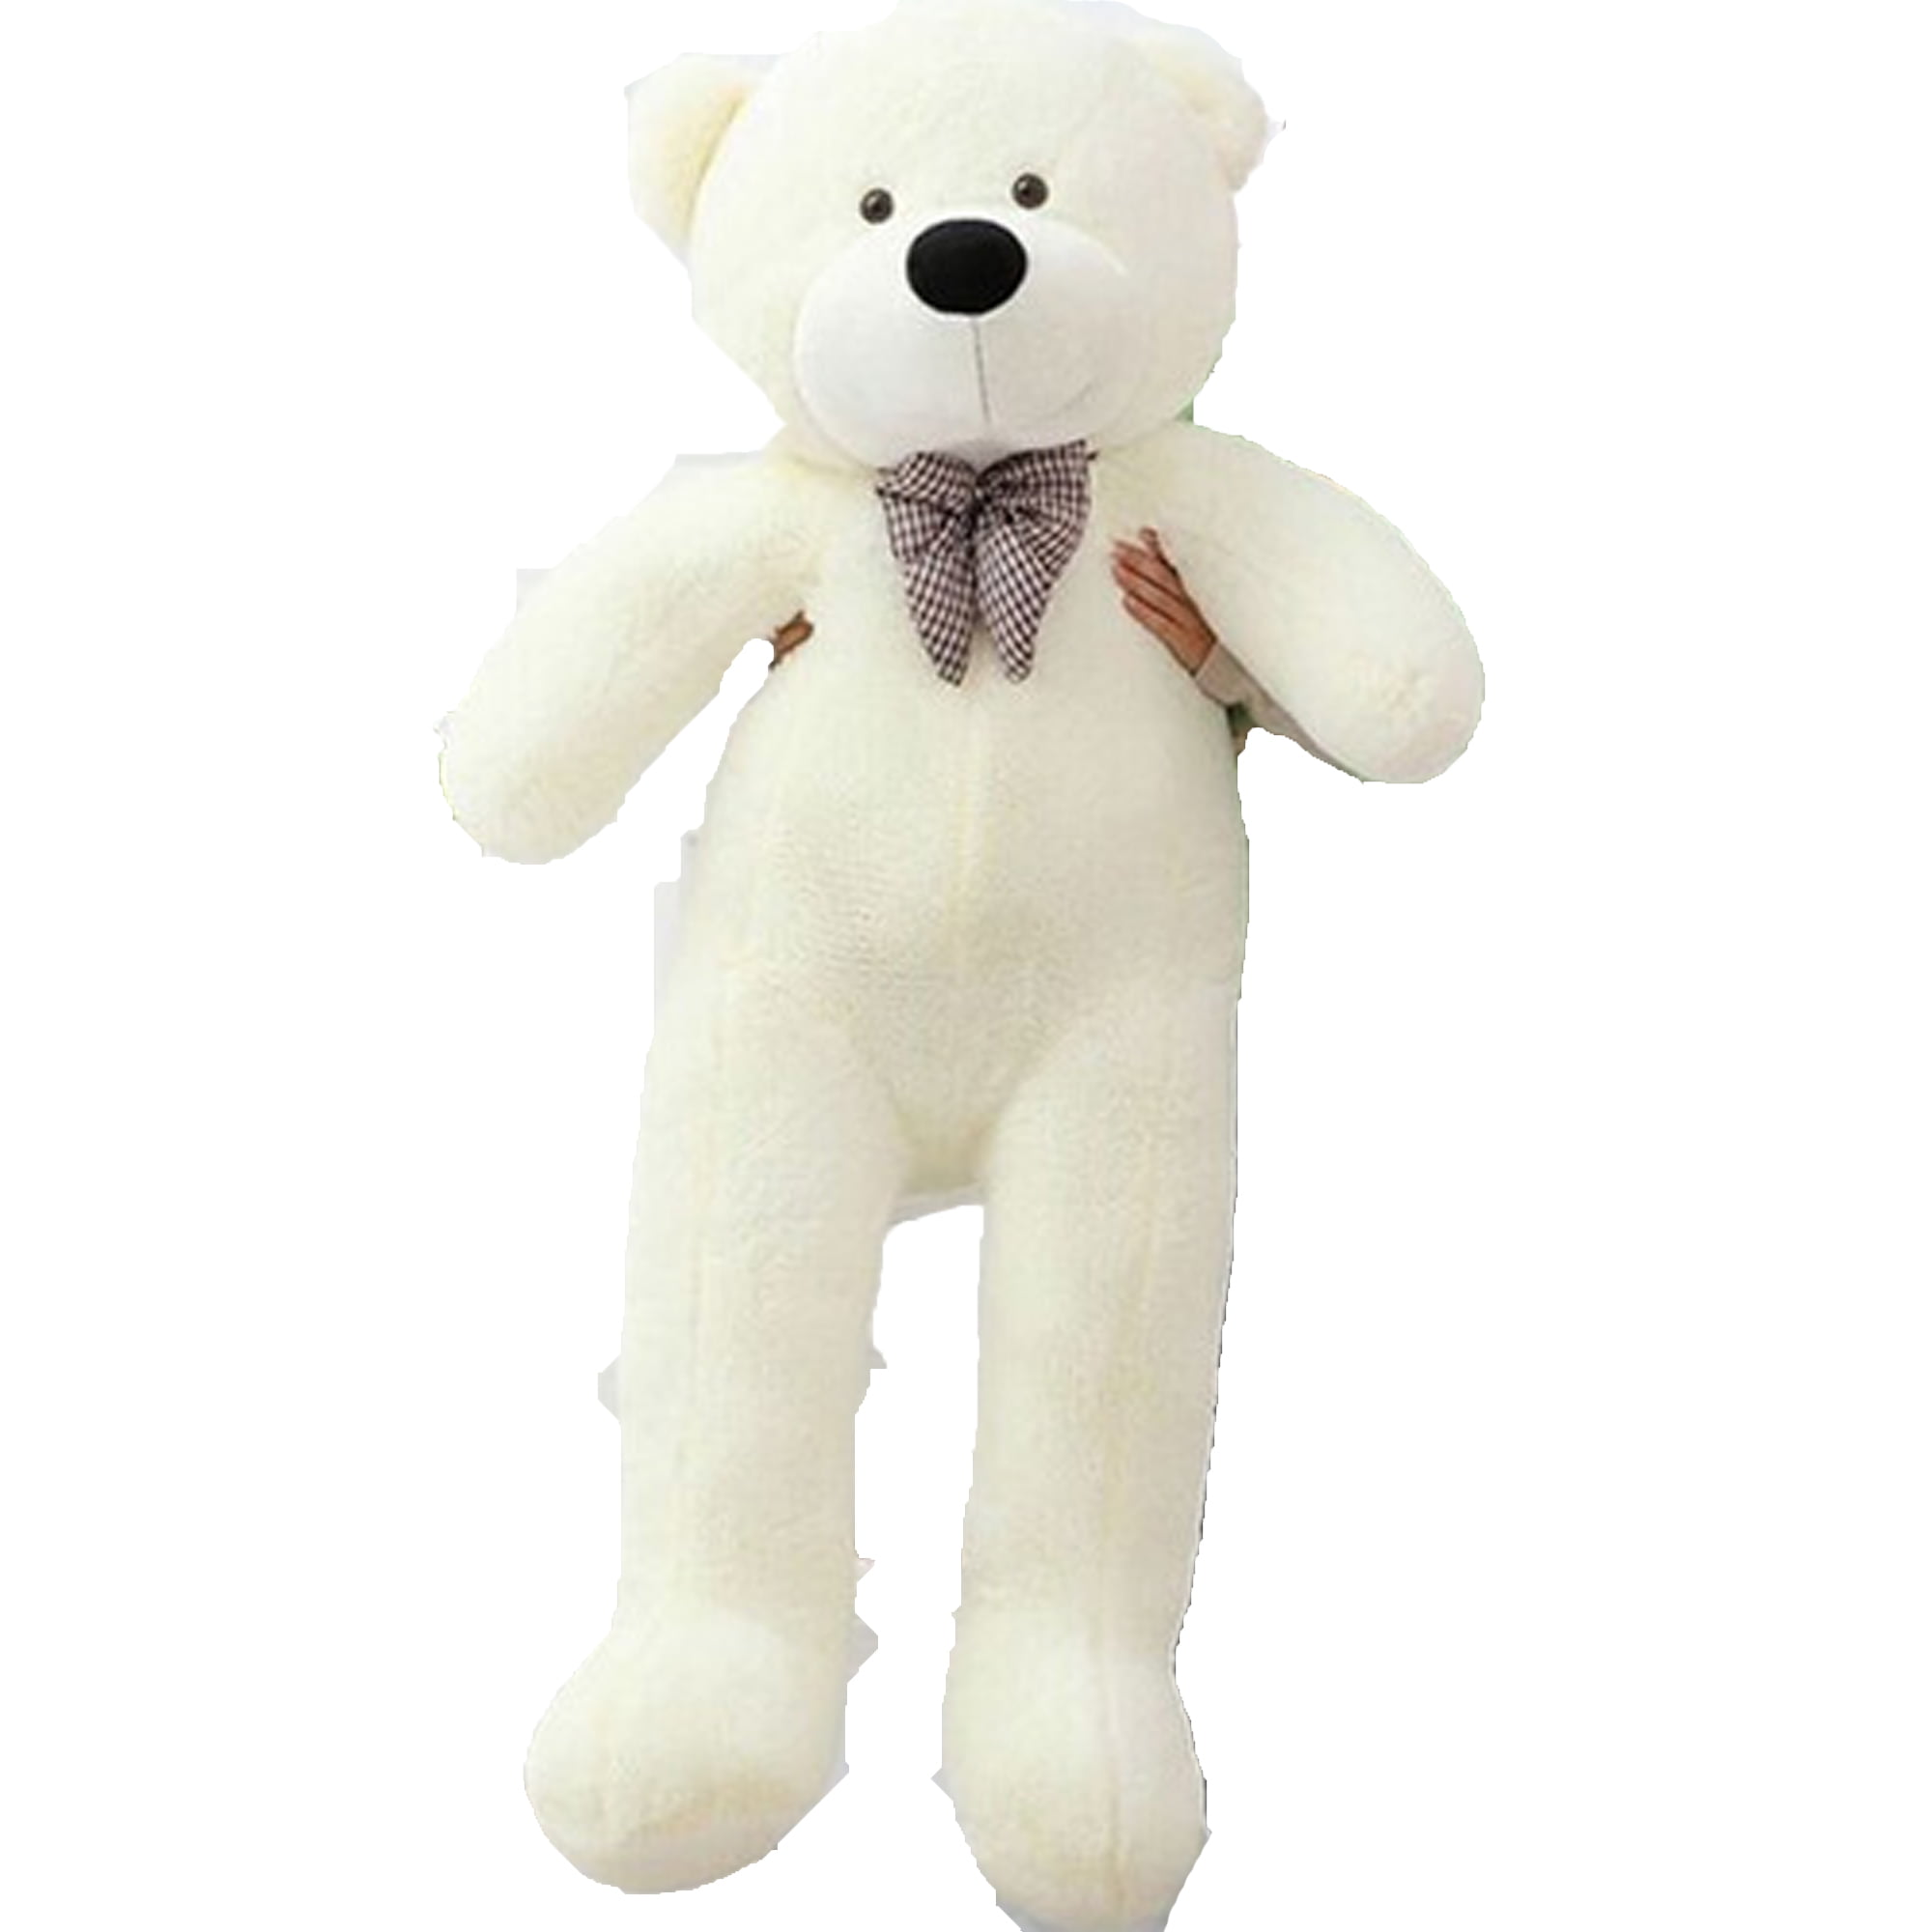 Hot 100cm Huge Purple Teddy Bear Soft Plush Doll Stuffed Giant Big Toy Xmas Gift 